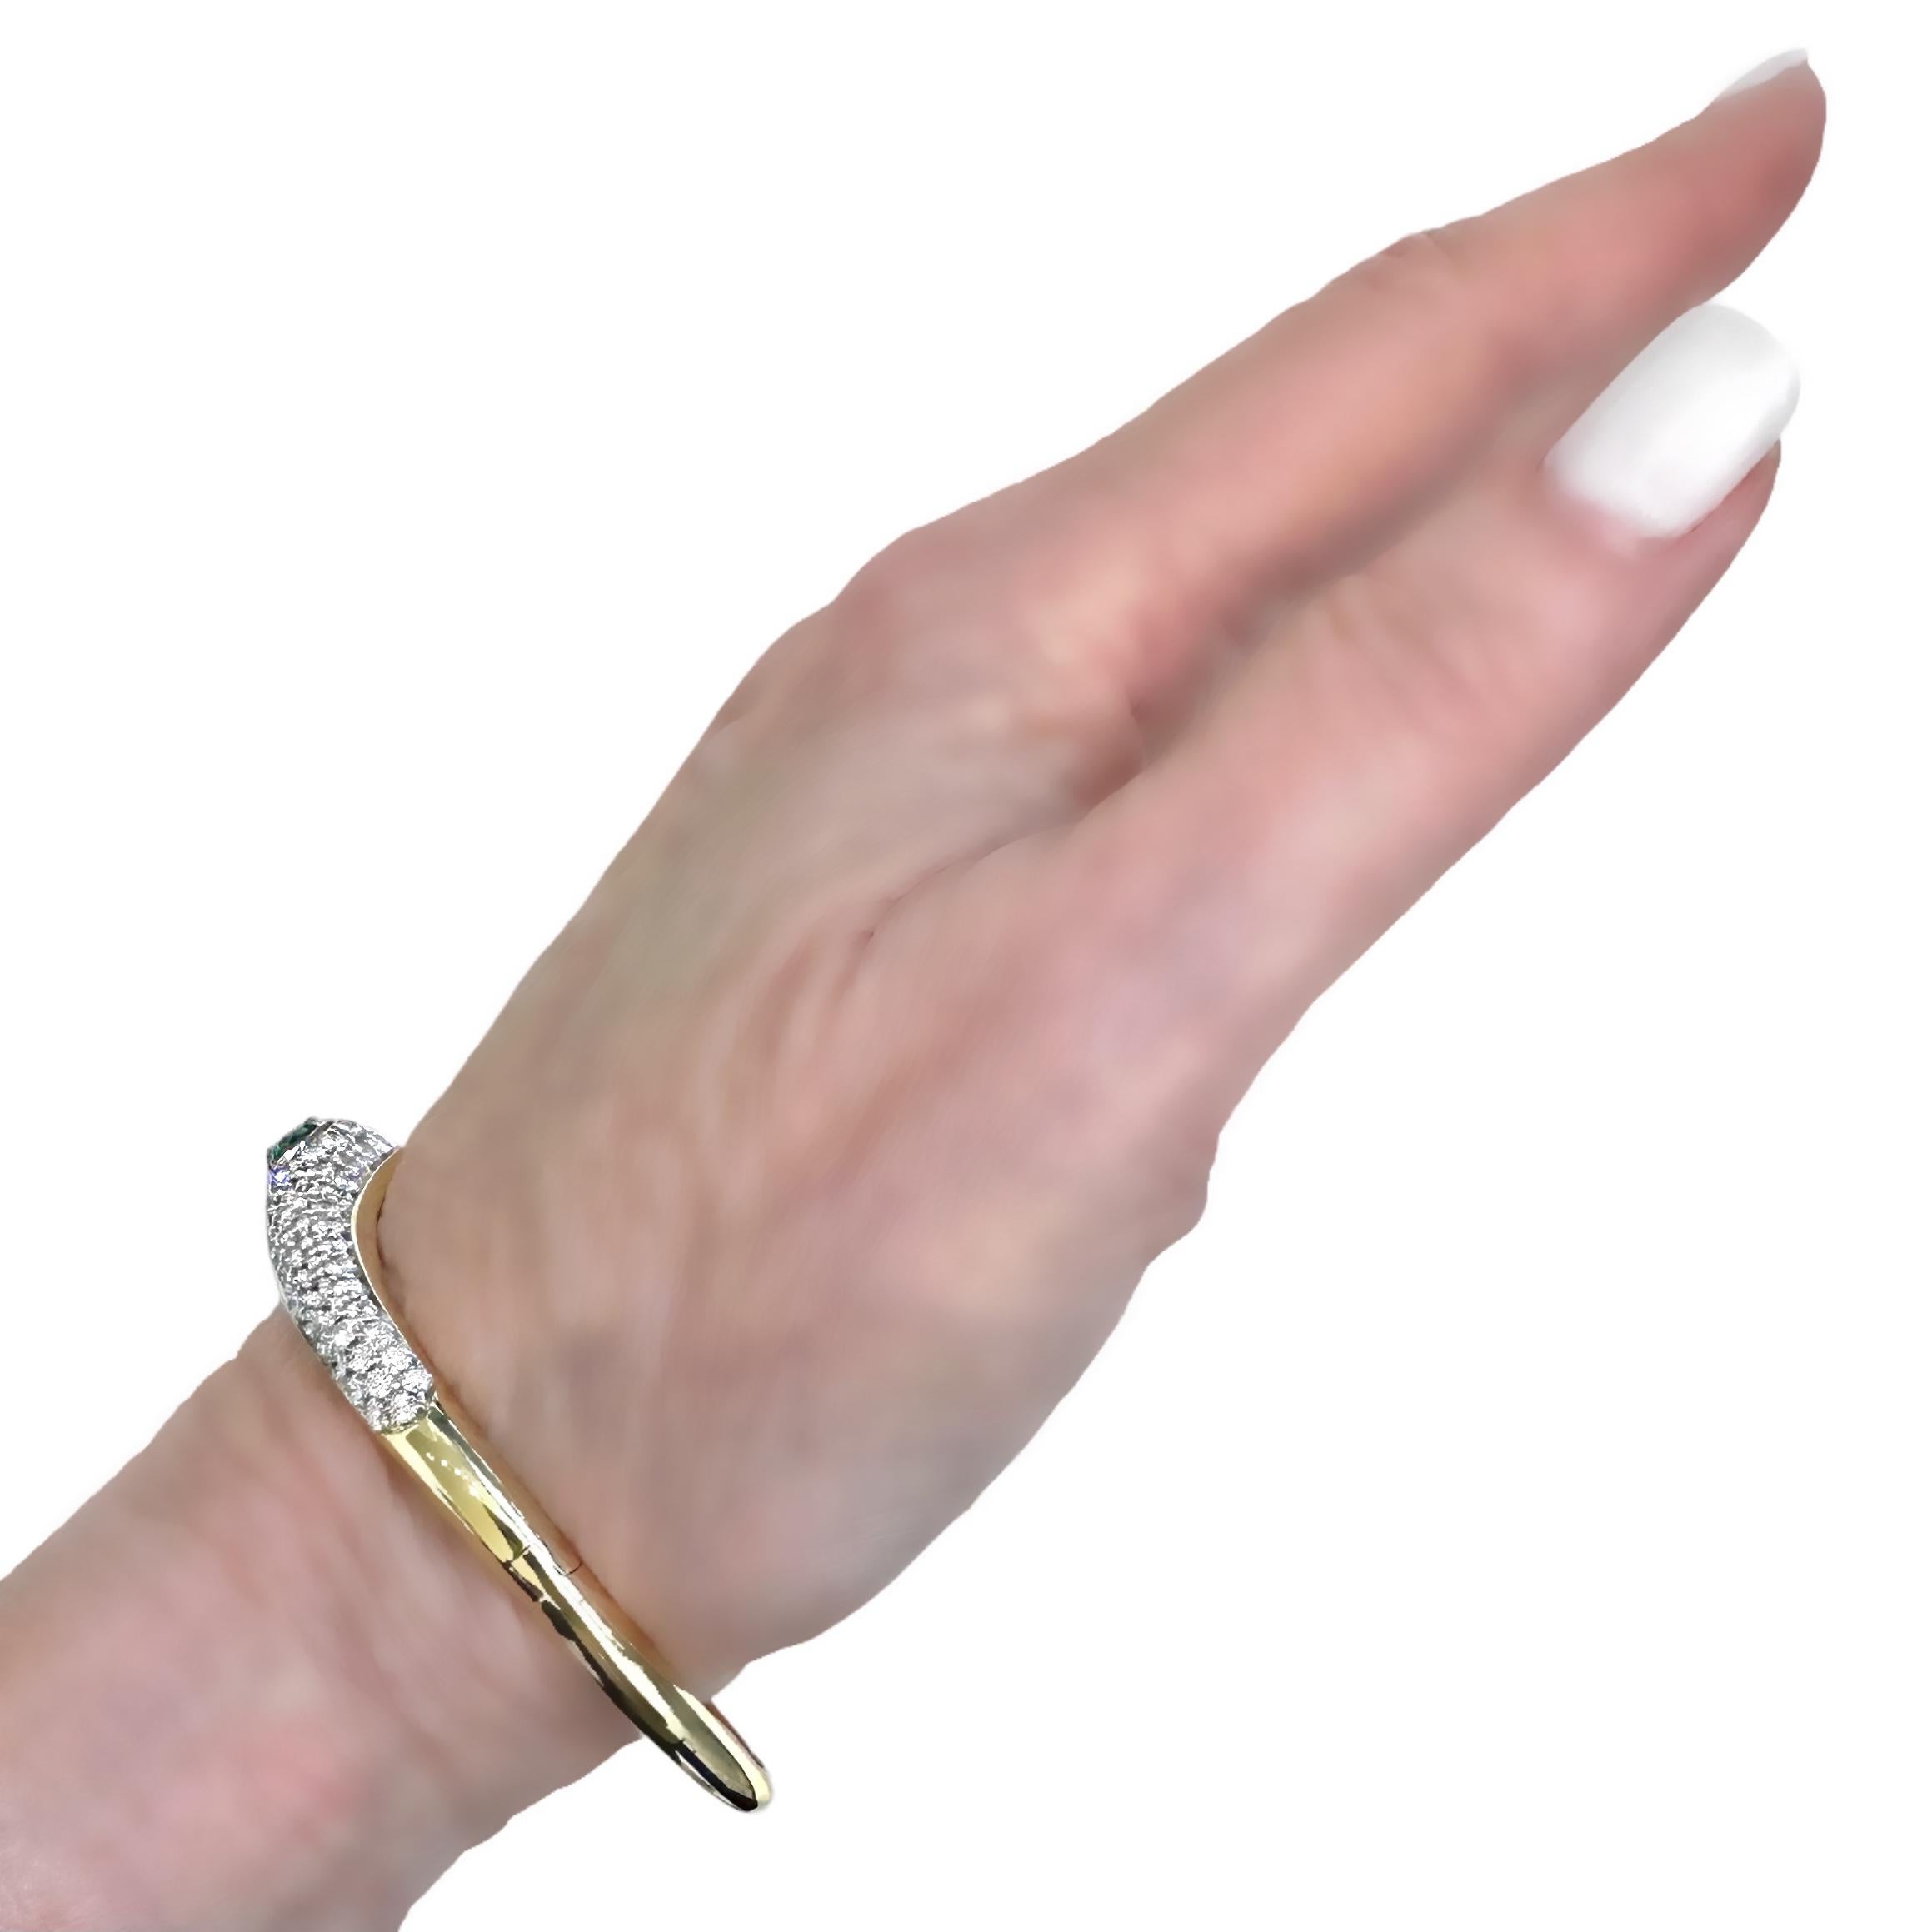  Stylish 18k Gold Bangle Bracelet with Heart Shaped Emerald and Diamonds For Sale 6